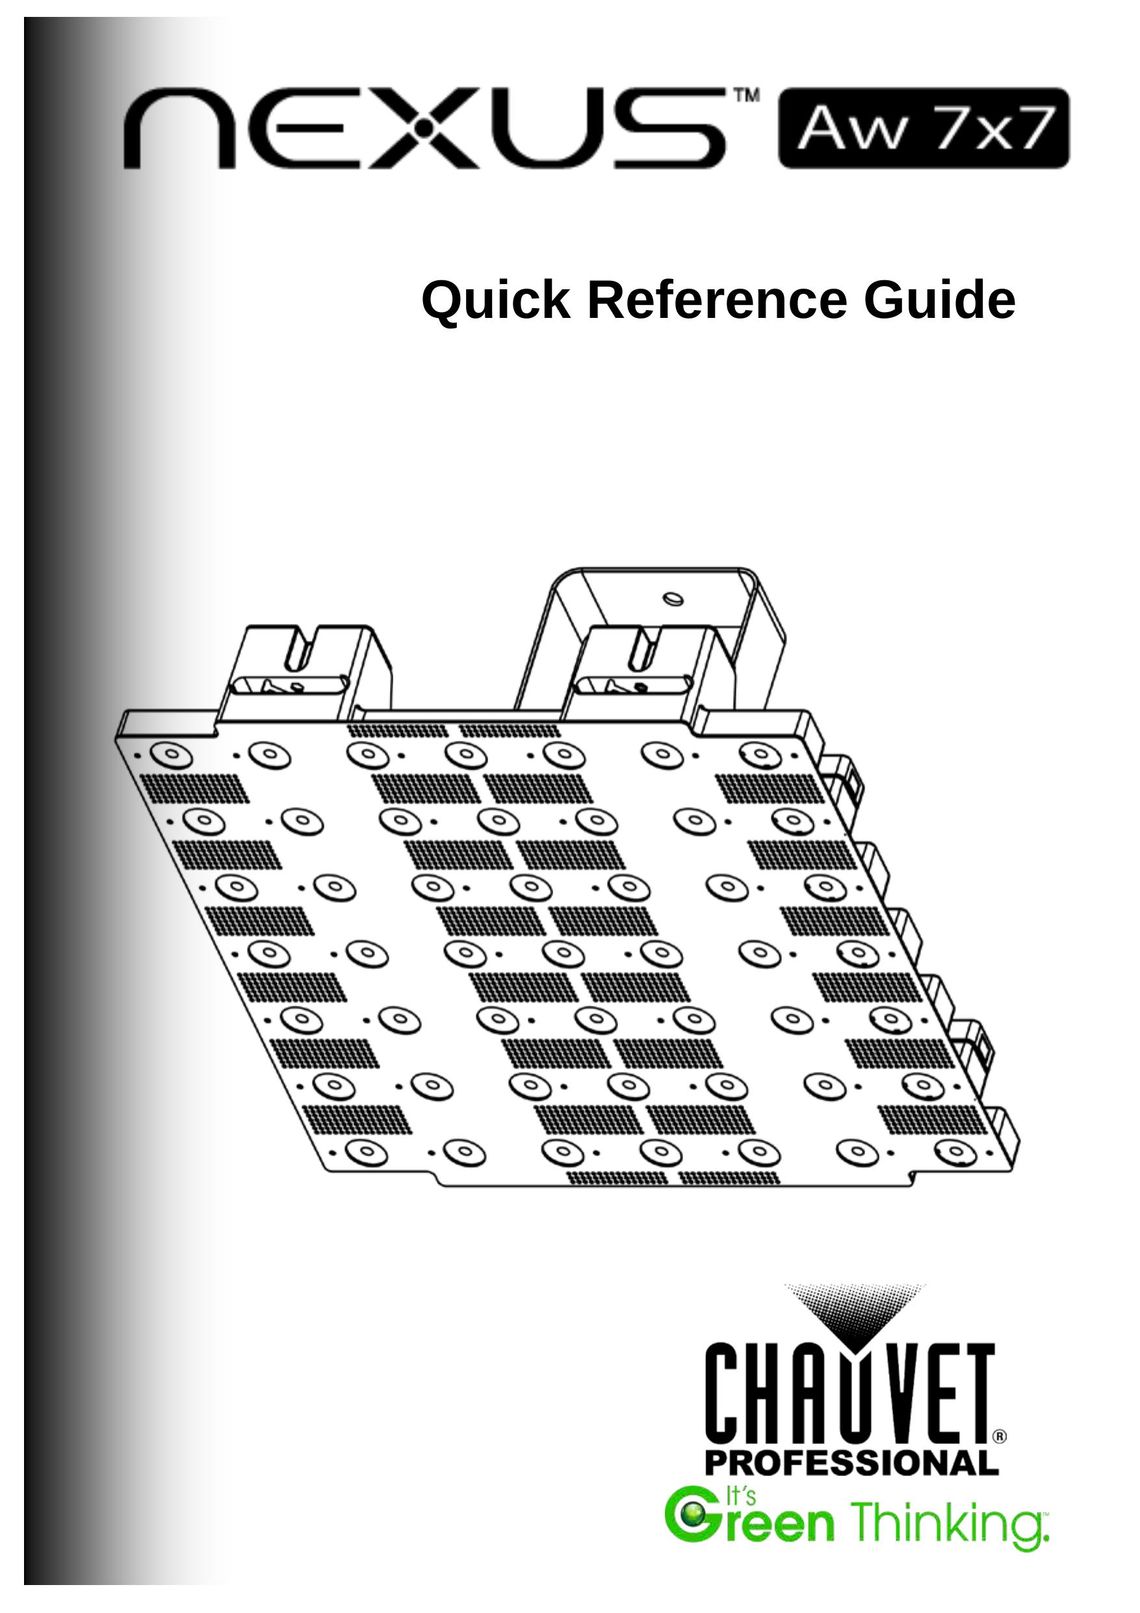 Chauvet Aw 7x7 Work Light User Manual